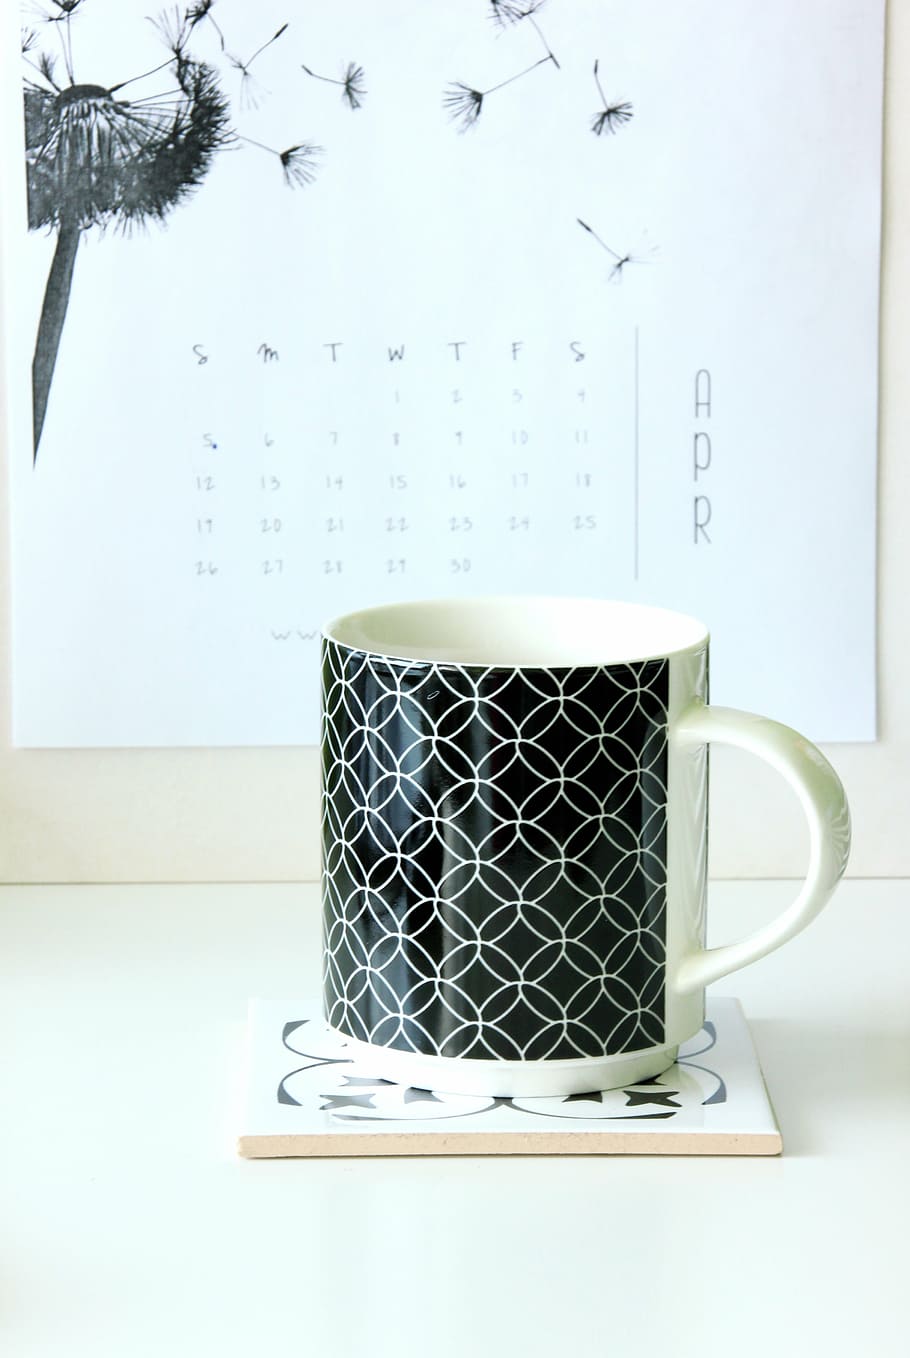 white, black, ceramic, mug, coaster, work desk, calendar, coffee, the drink, table